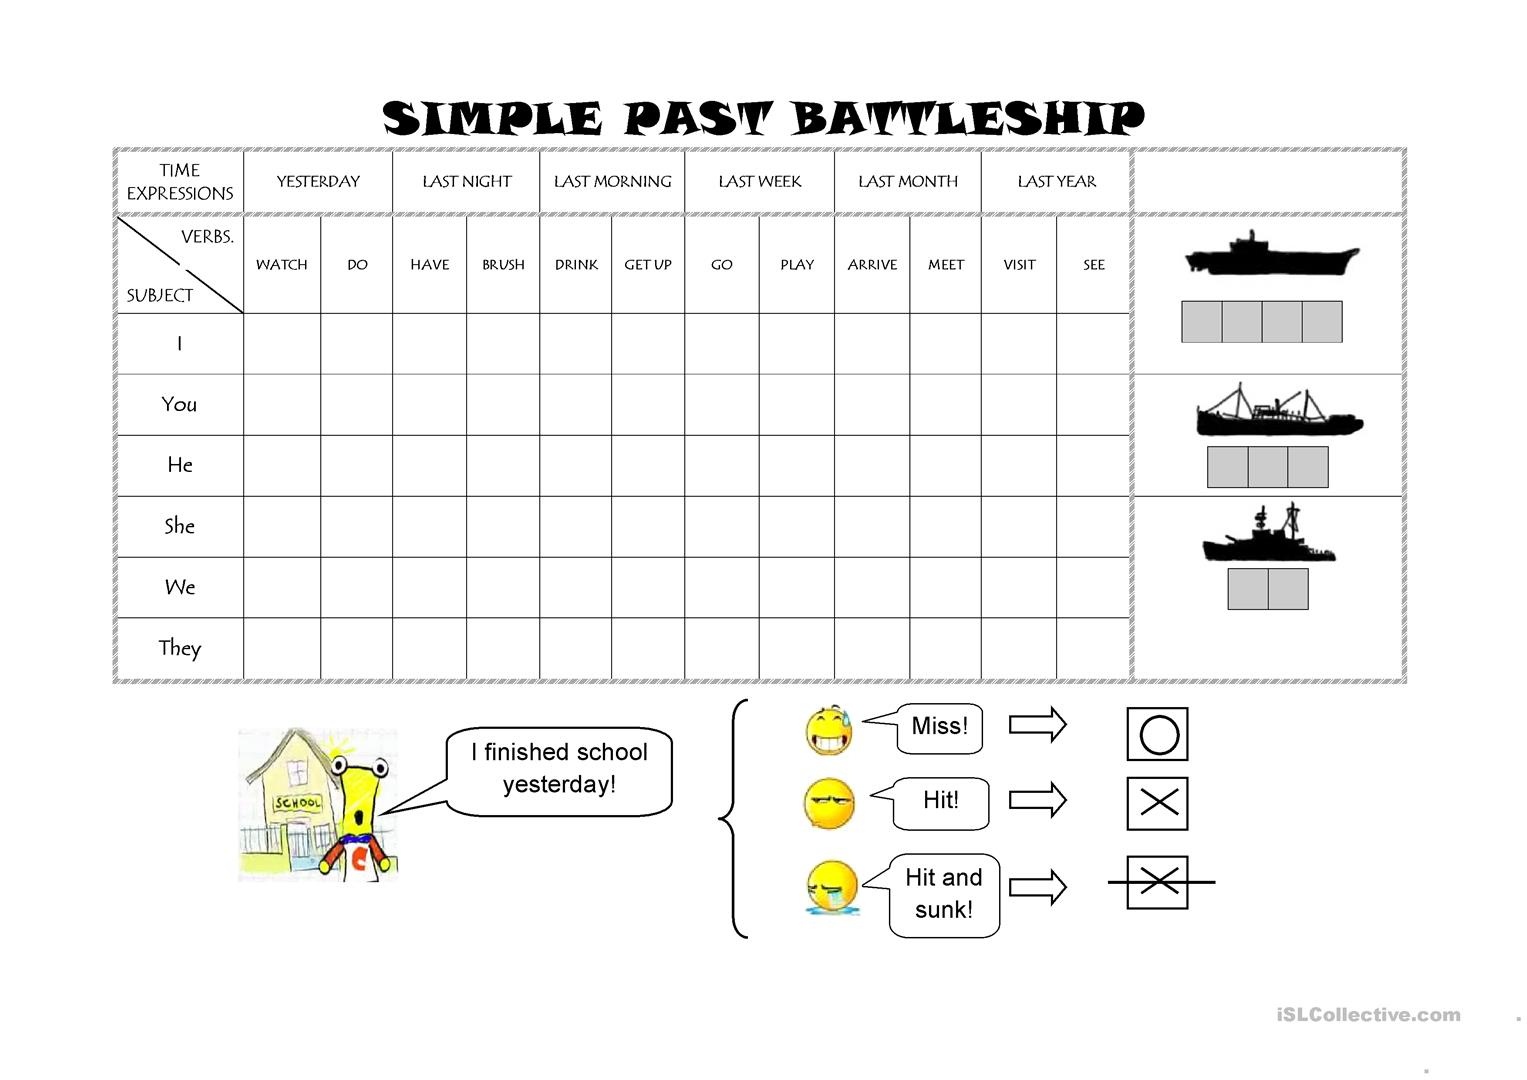 Simple Past Battleship Worksheet - Free Esl Printable Worksheets - Free Printable Battleship Game